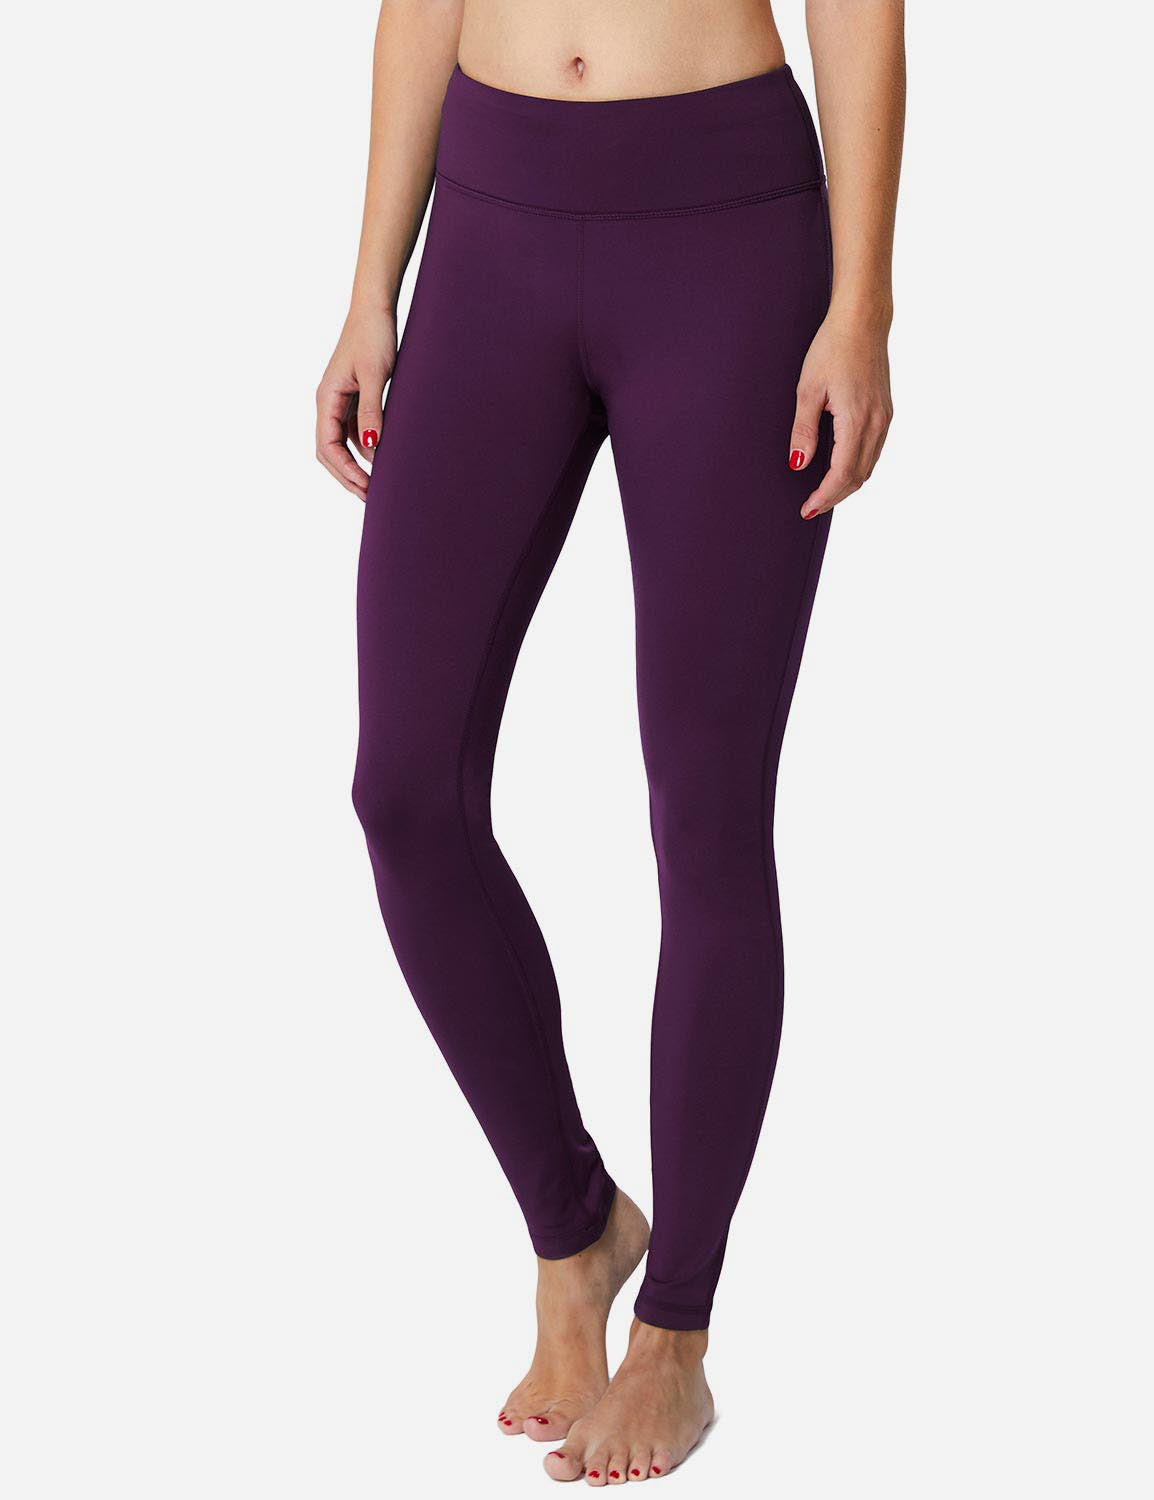 Baleaf Women's Mid-Rise Fleece Lined Basic Yoga & Workout Leggings abh018 Purple Side